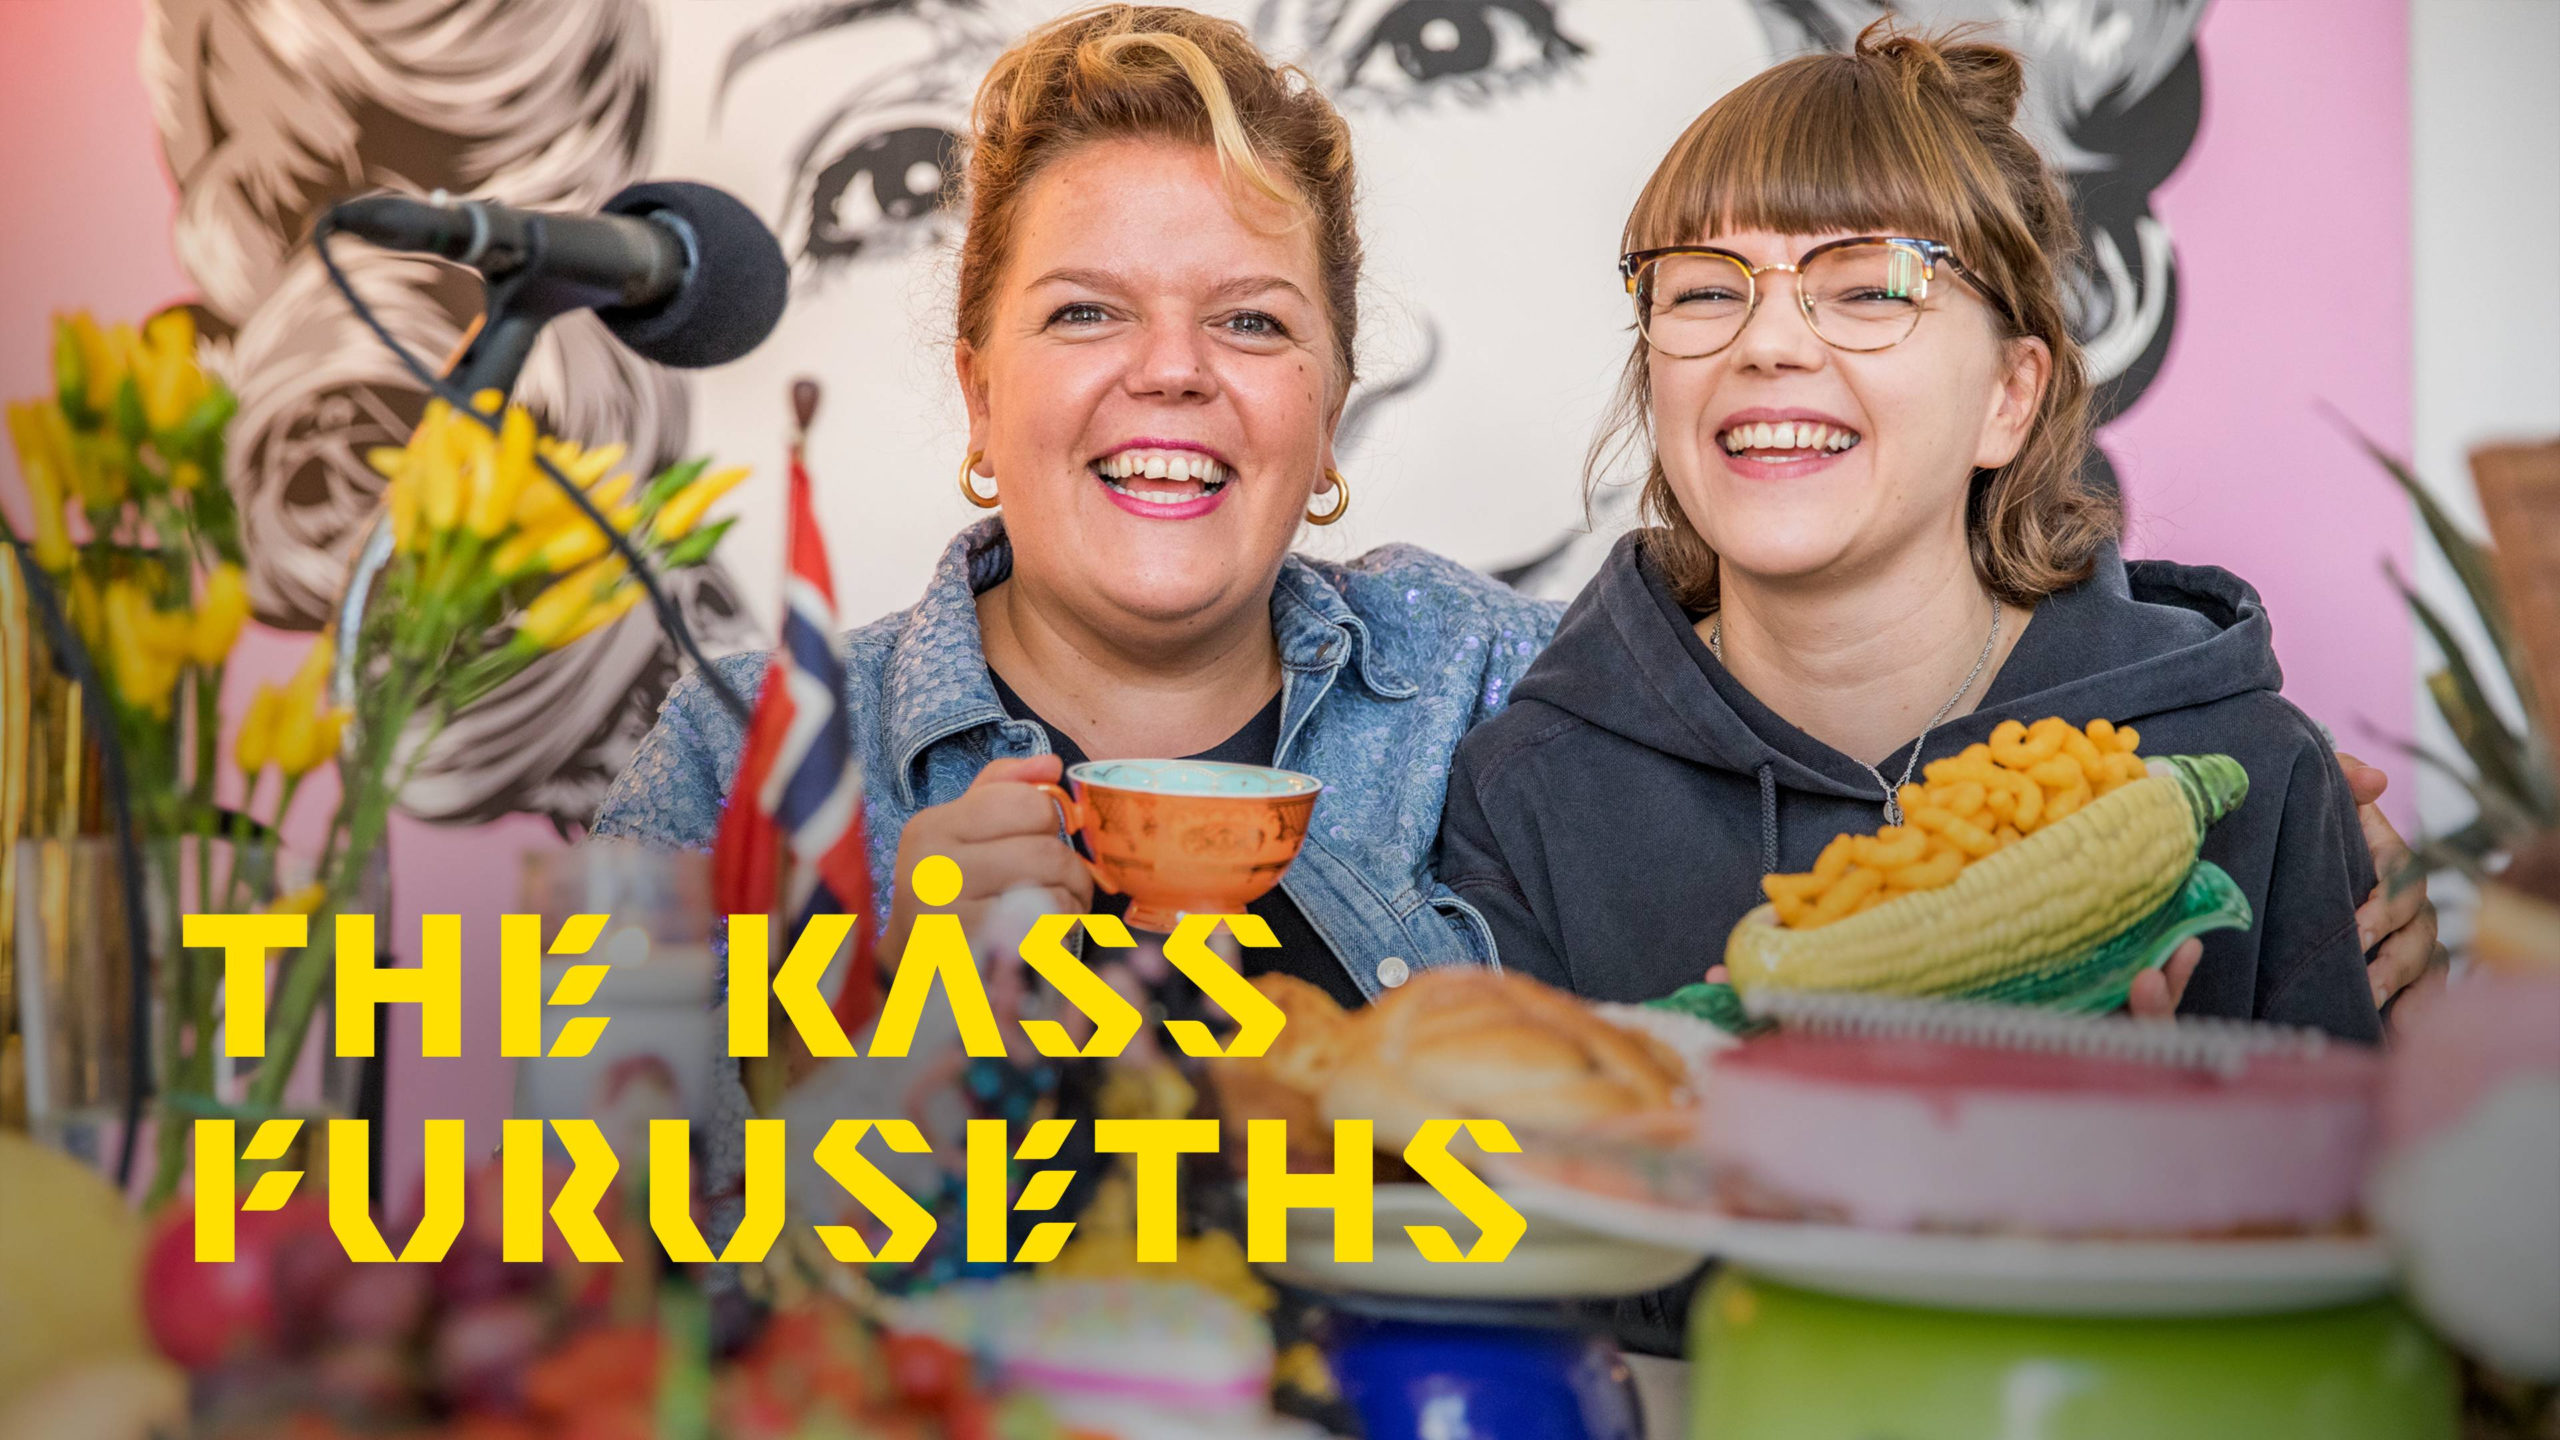 The Kåss Furuseths